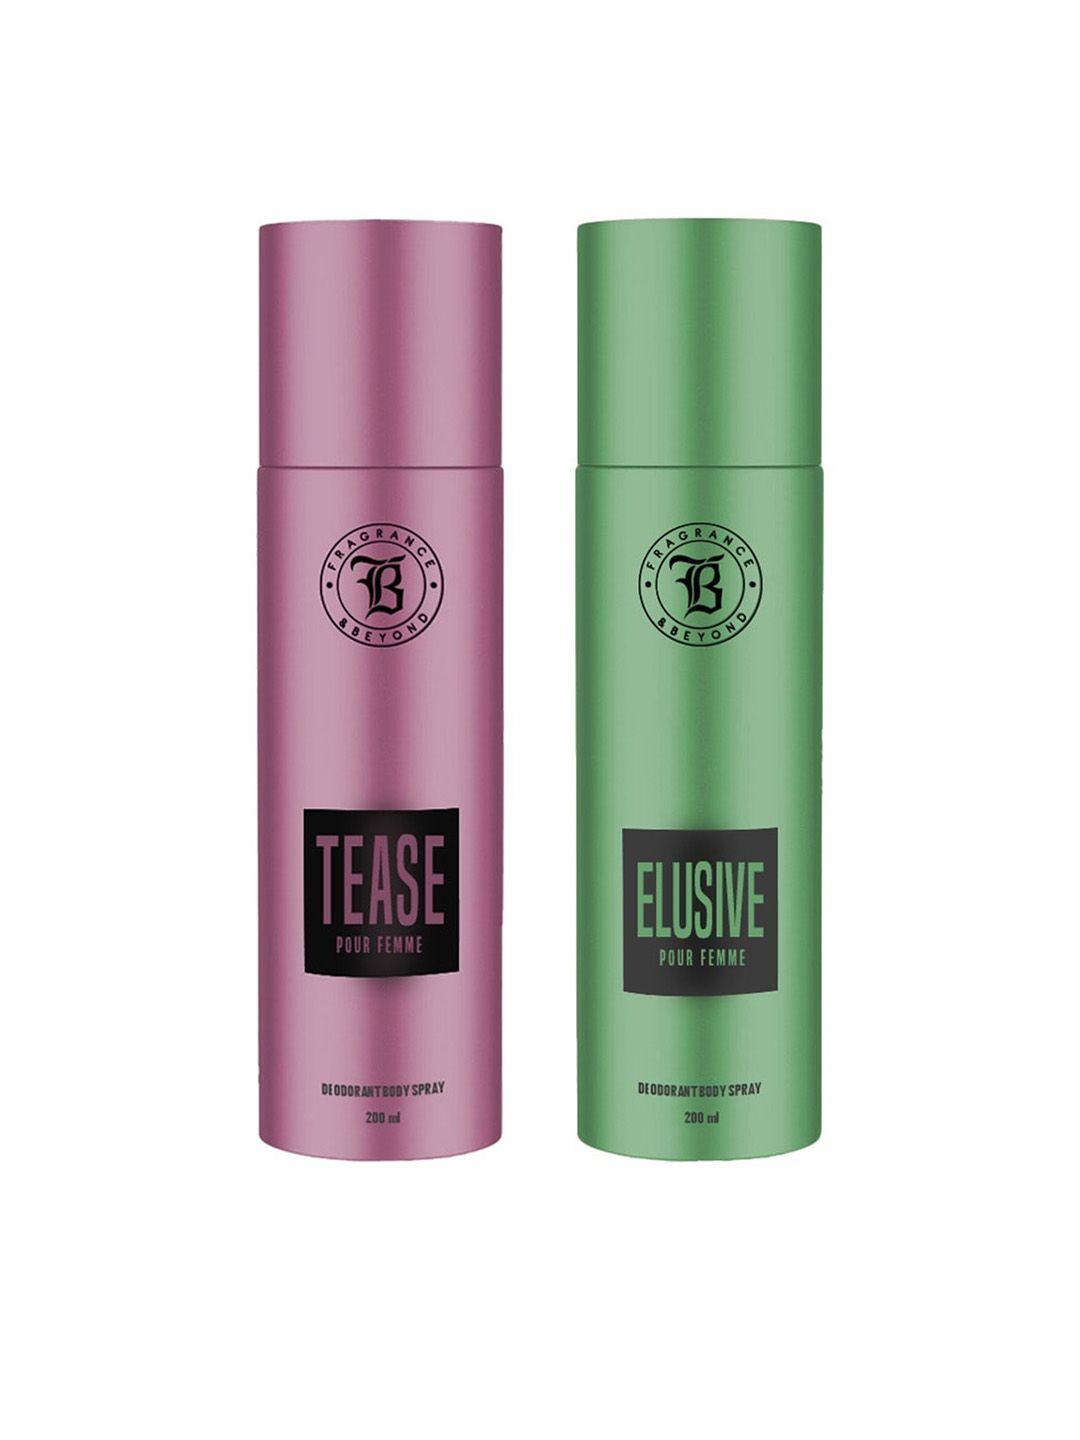 fragrance & beyond women set of tease & elusive deodorant body spray - 200 ml each